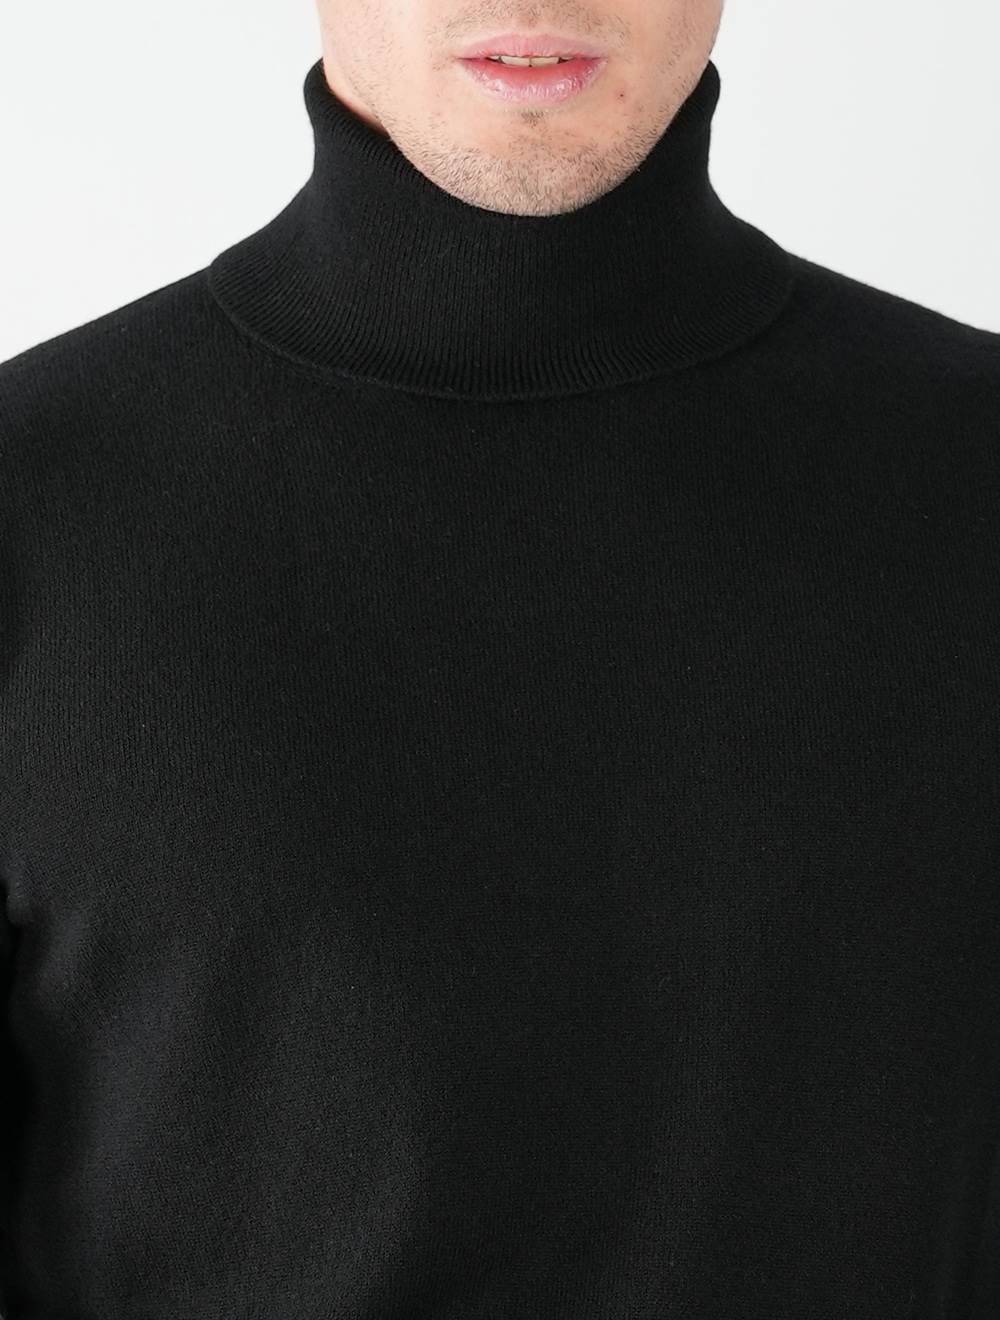 Fioroni Black Cashmere Sweater Turtleneck